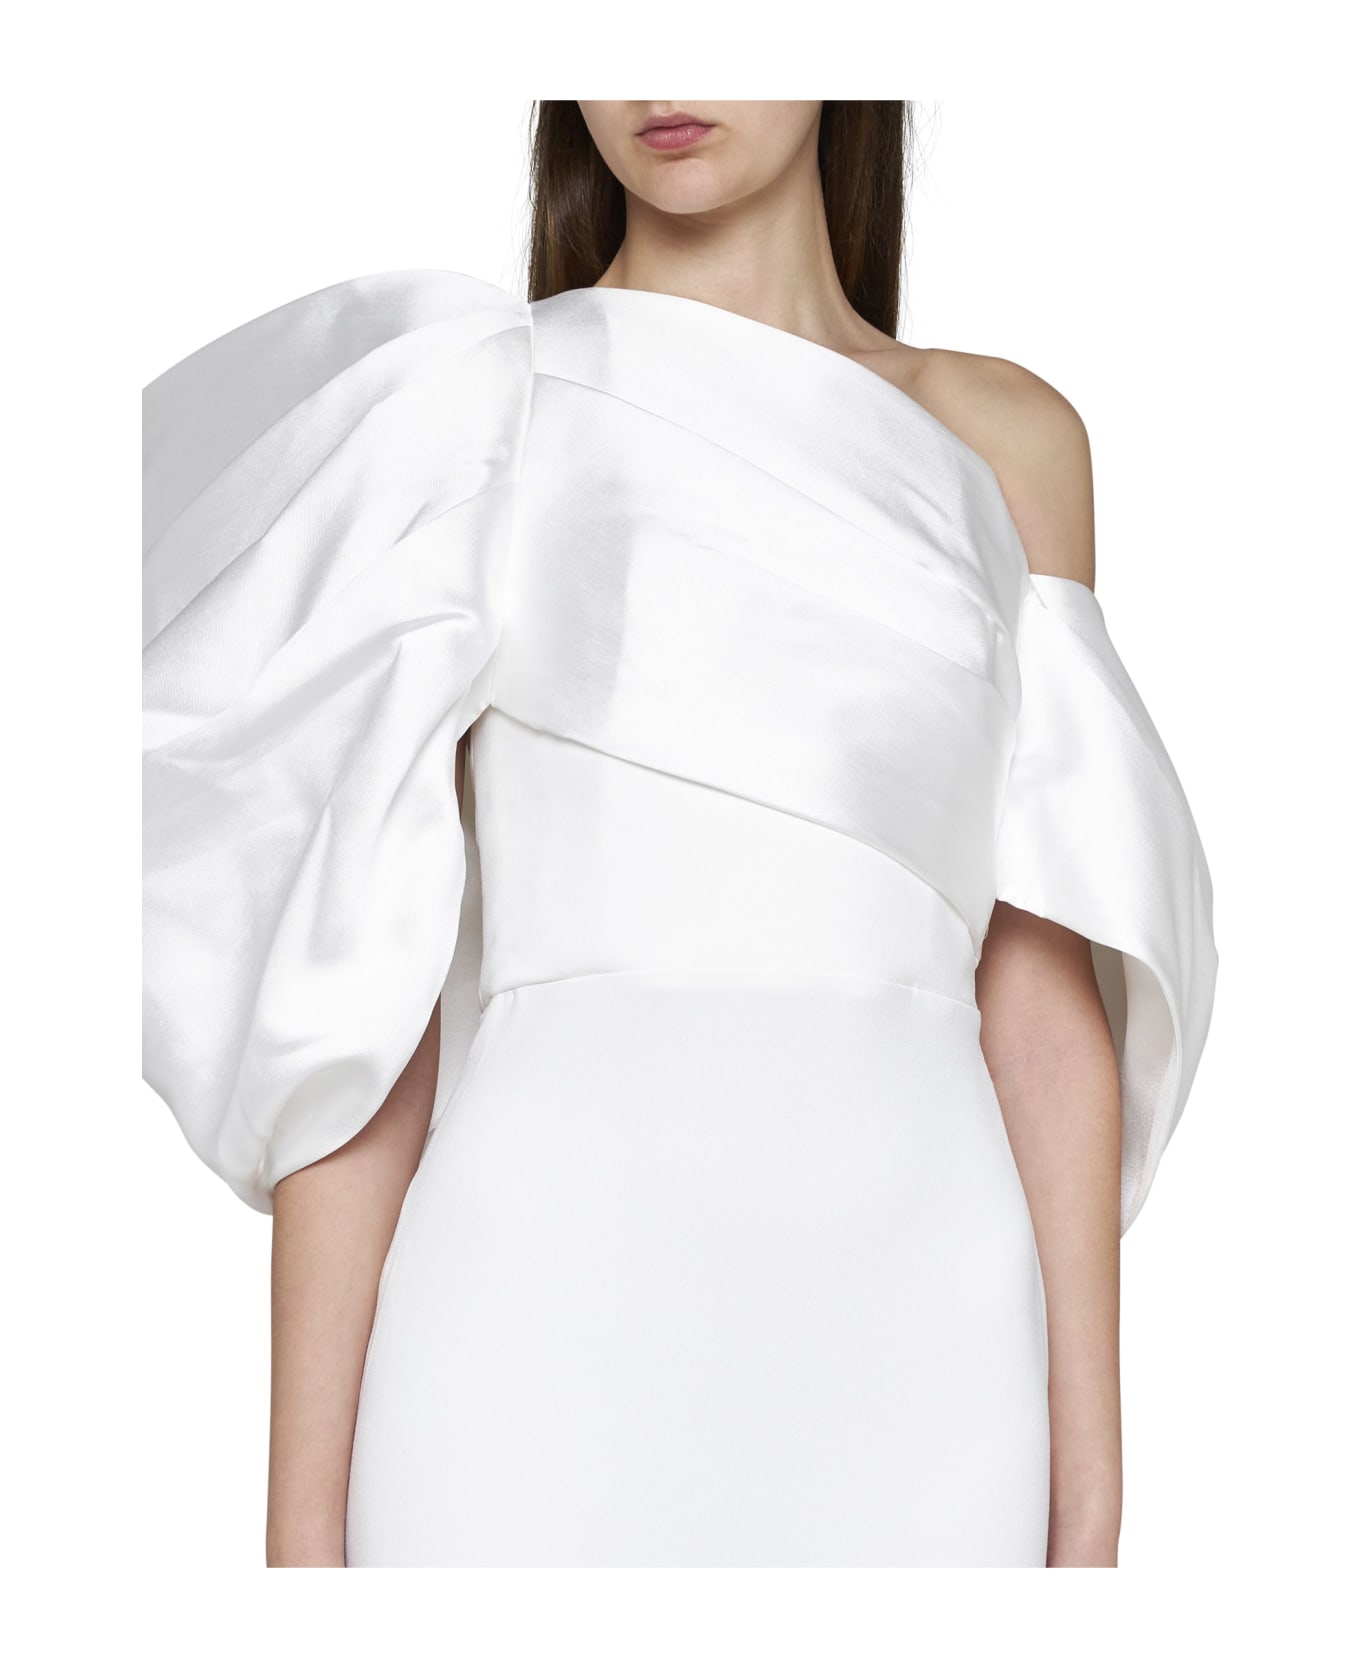 Solace London Dress - White